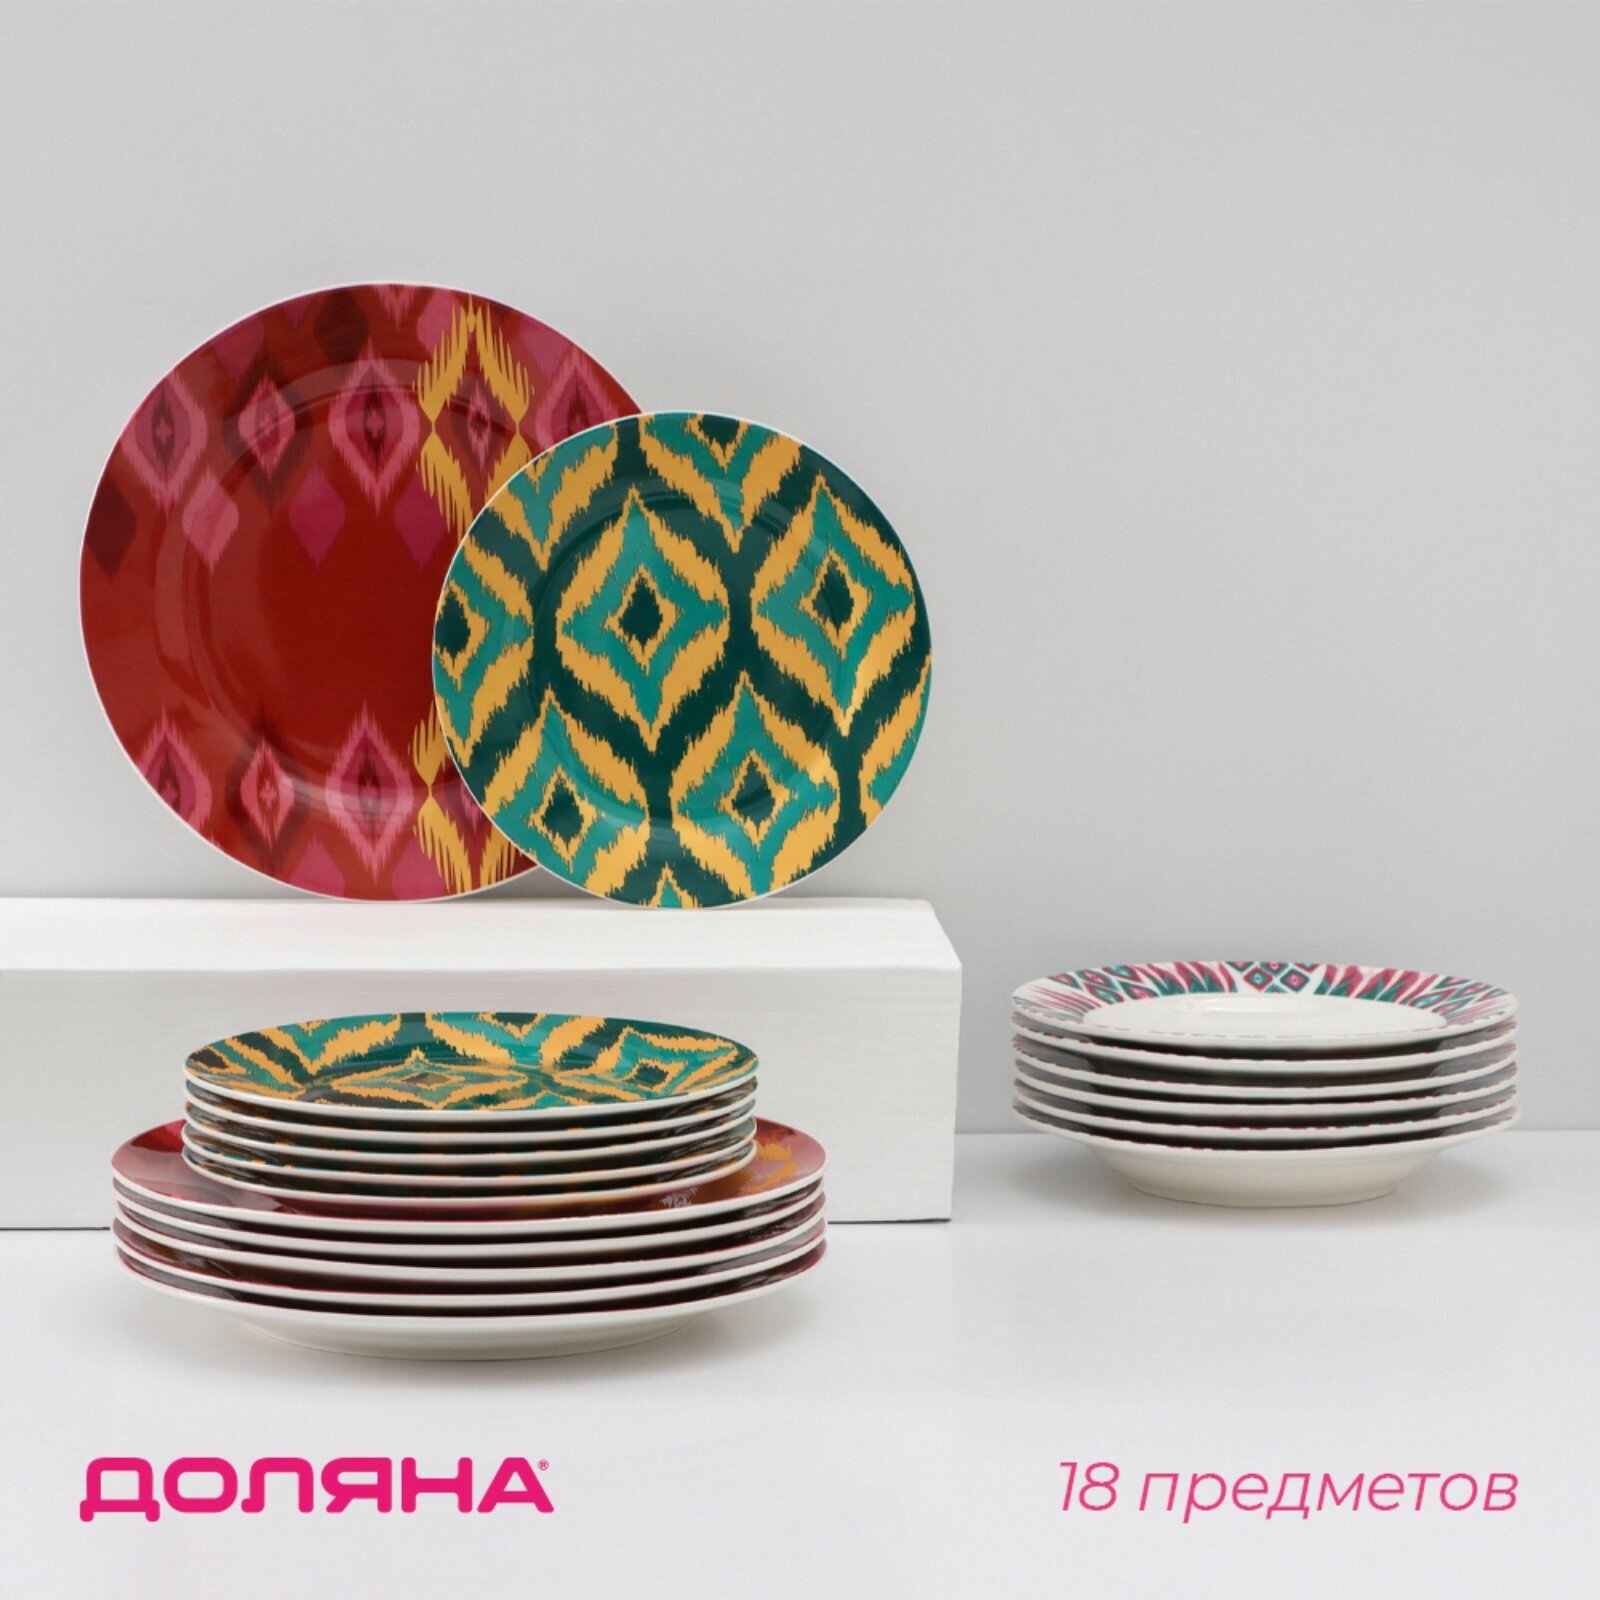 Набор тарелок фарфоровых Askım, 18 предметов: 6 тарелок d=20 см, 6 тарелок d=25 см, 6 тарелок глубоких 340 мл